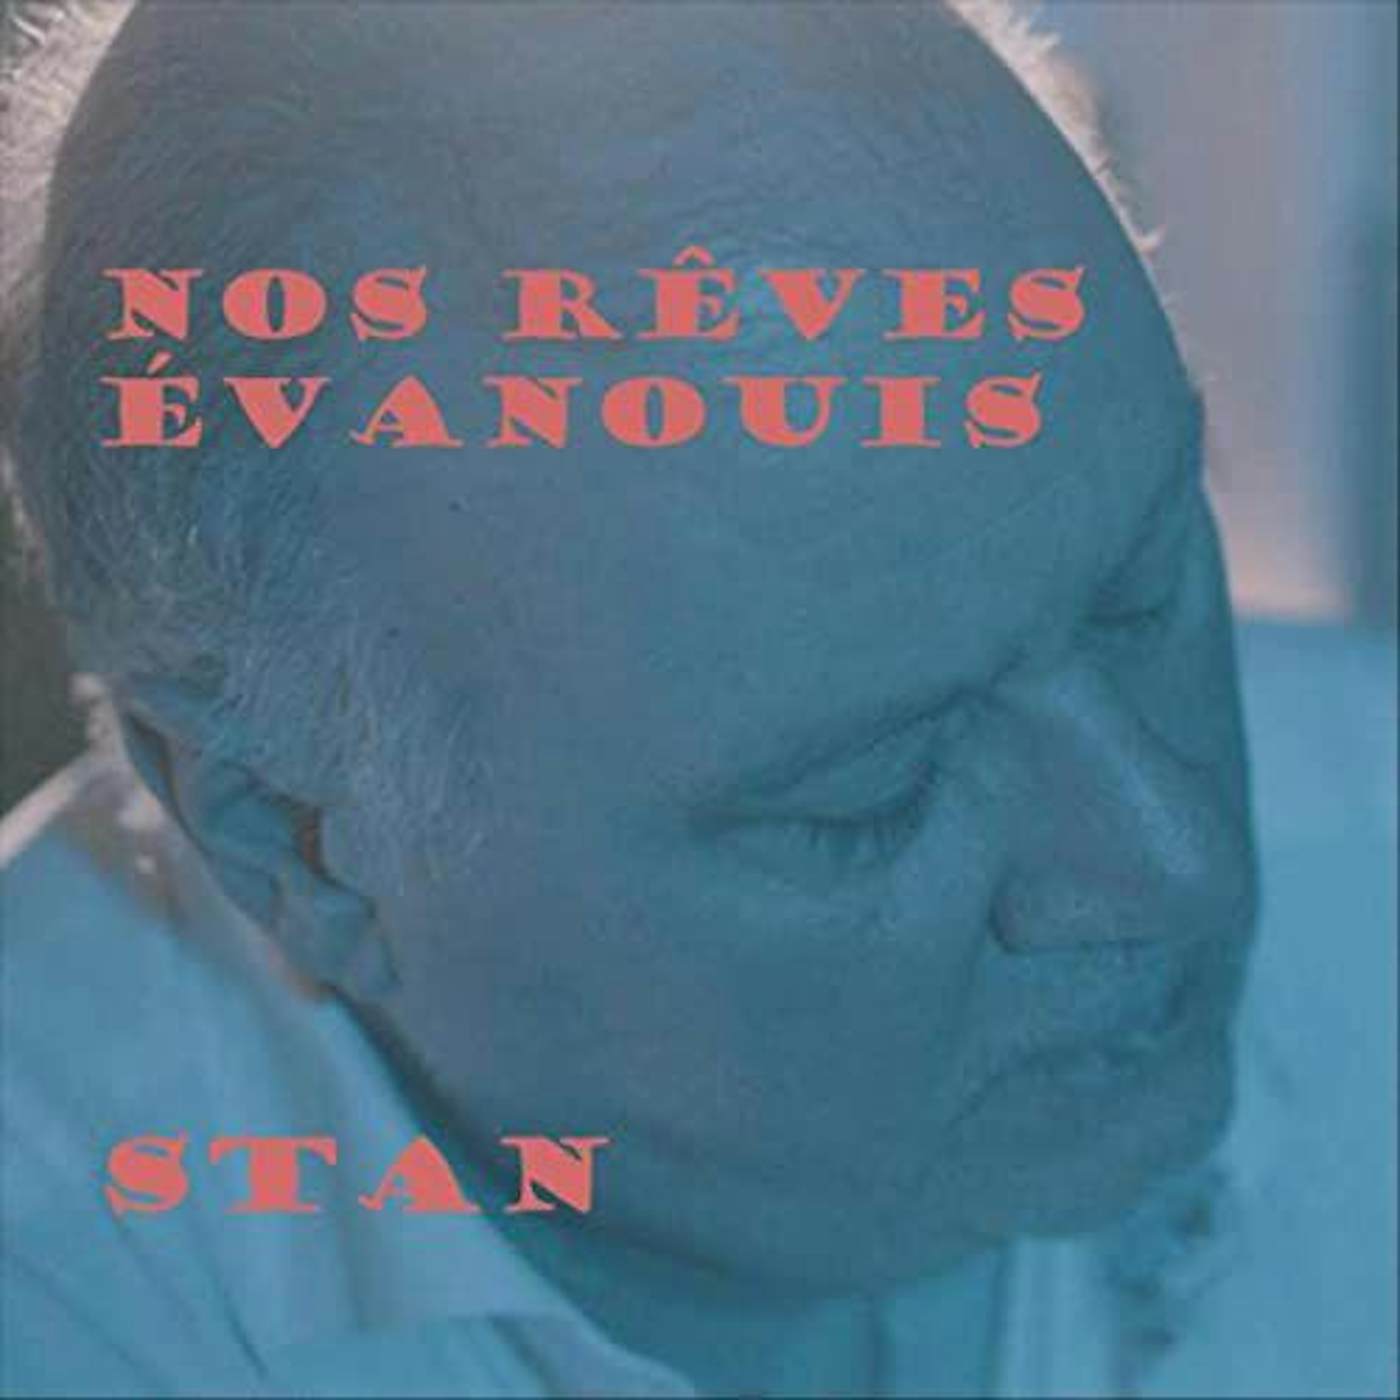 Stan NOS REVES EVANOUIS CD